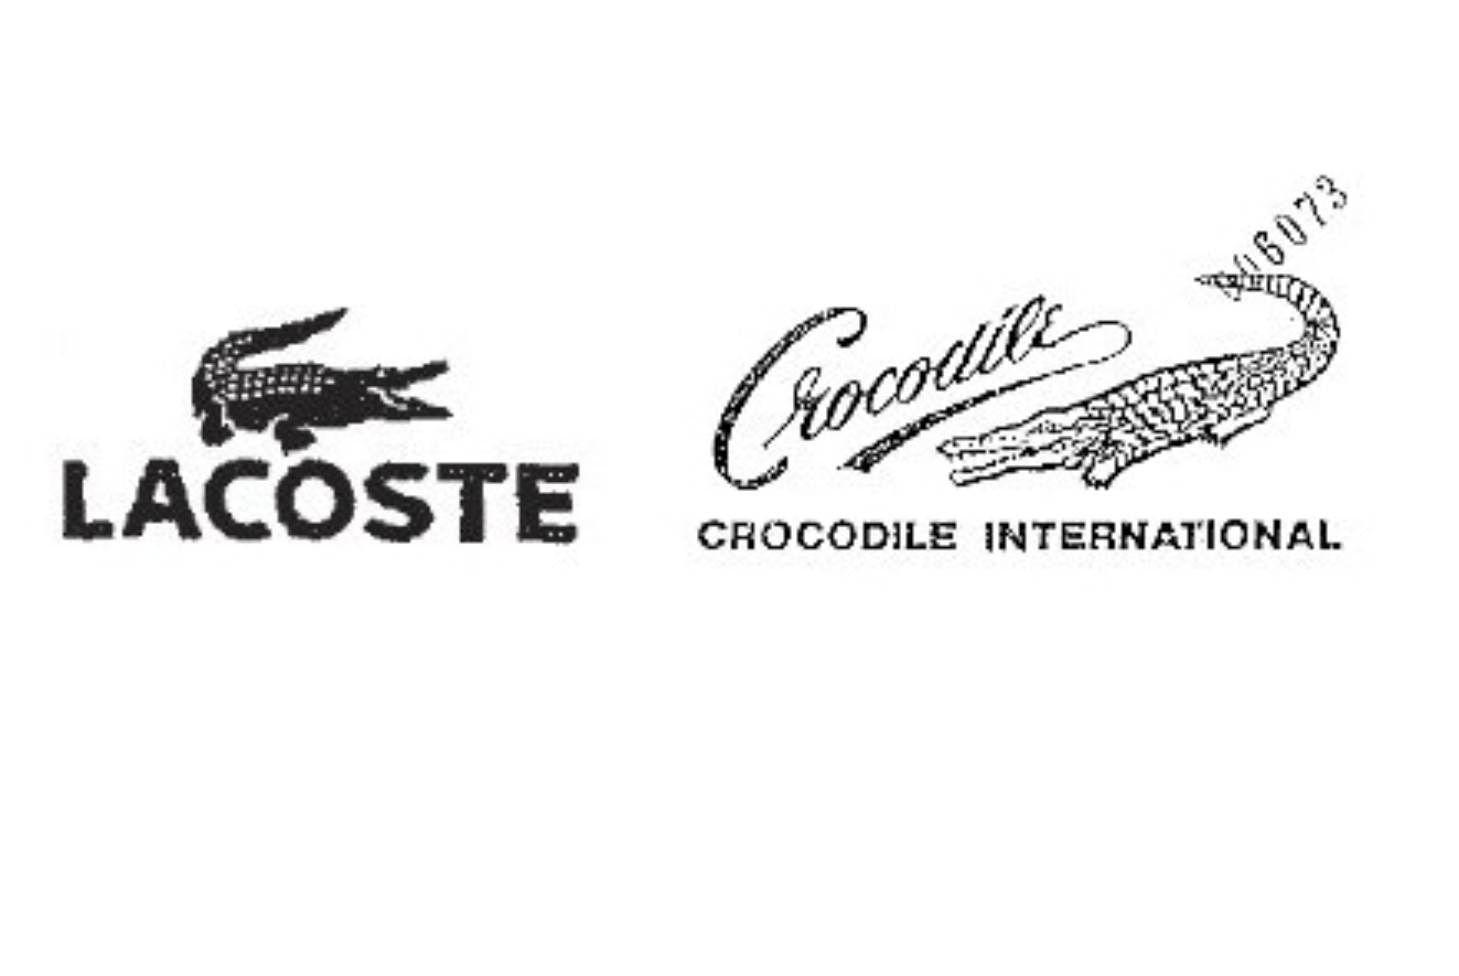 Crocodile Clothing Logo - Clothing war between Lacoste and Crocodile International escalated ...